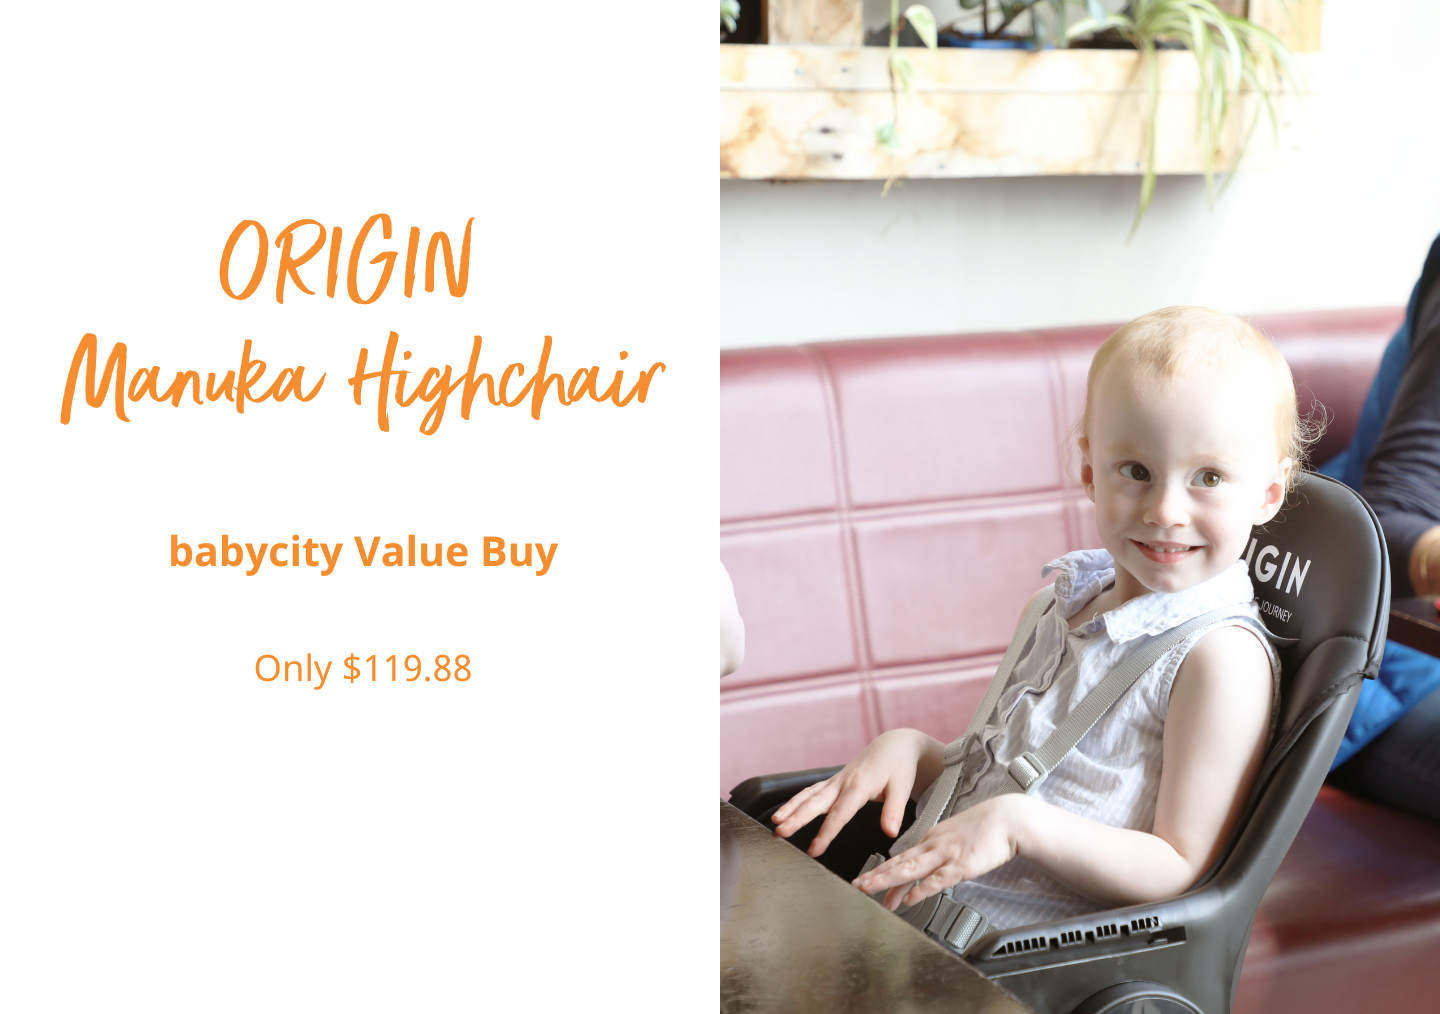 ORIGIN Manuka Highchair - babycity Value Buy - Only $119.88